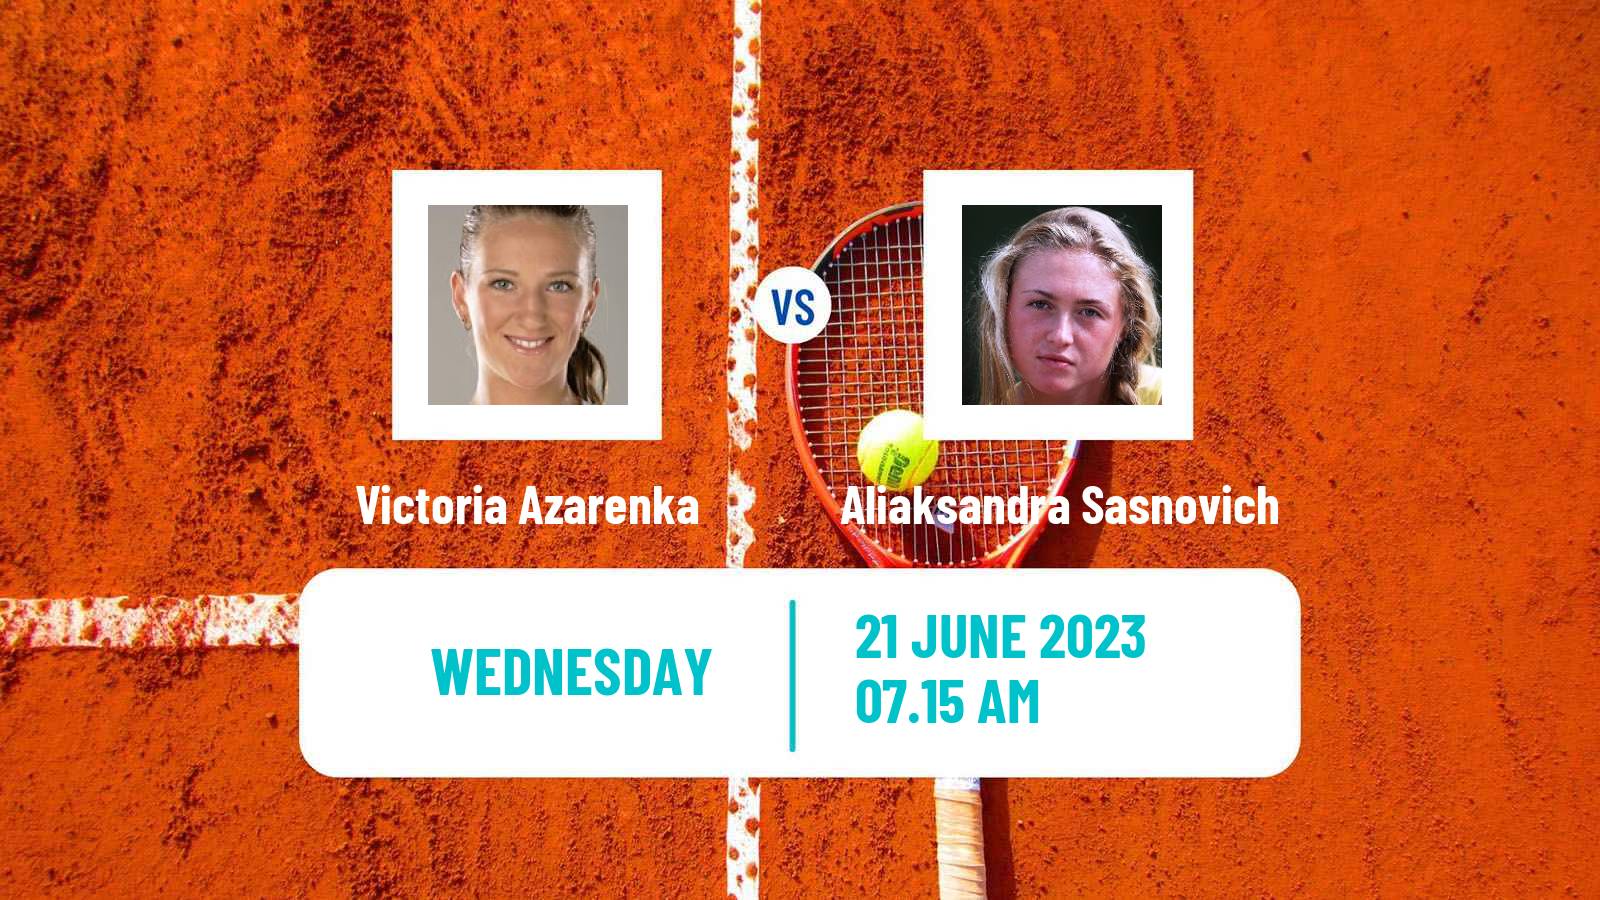 Tennis WTA Berlin Victoria Azarenka - Aliaksandra Sasnovich